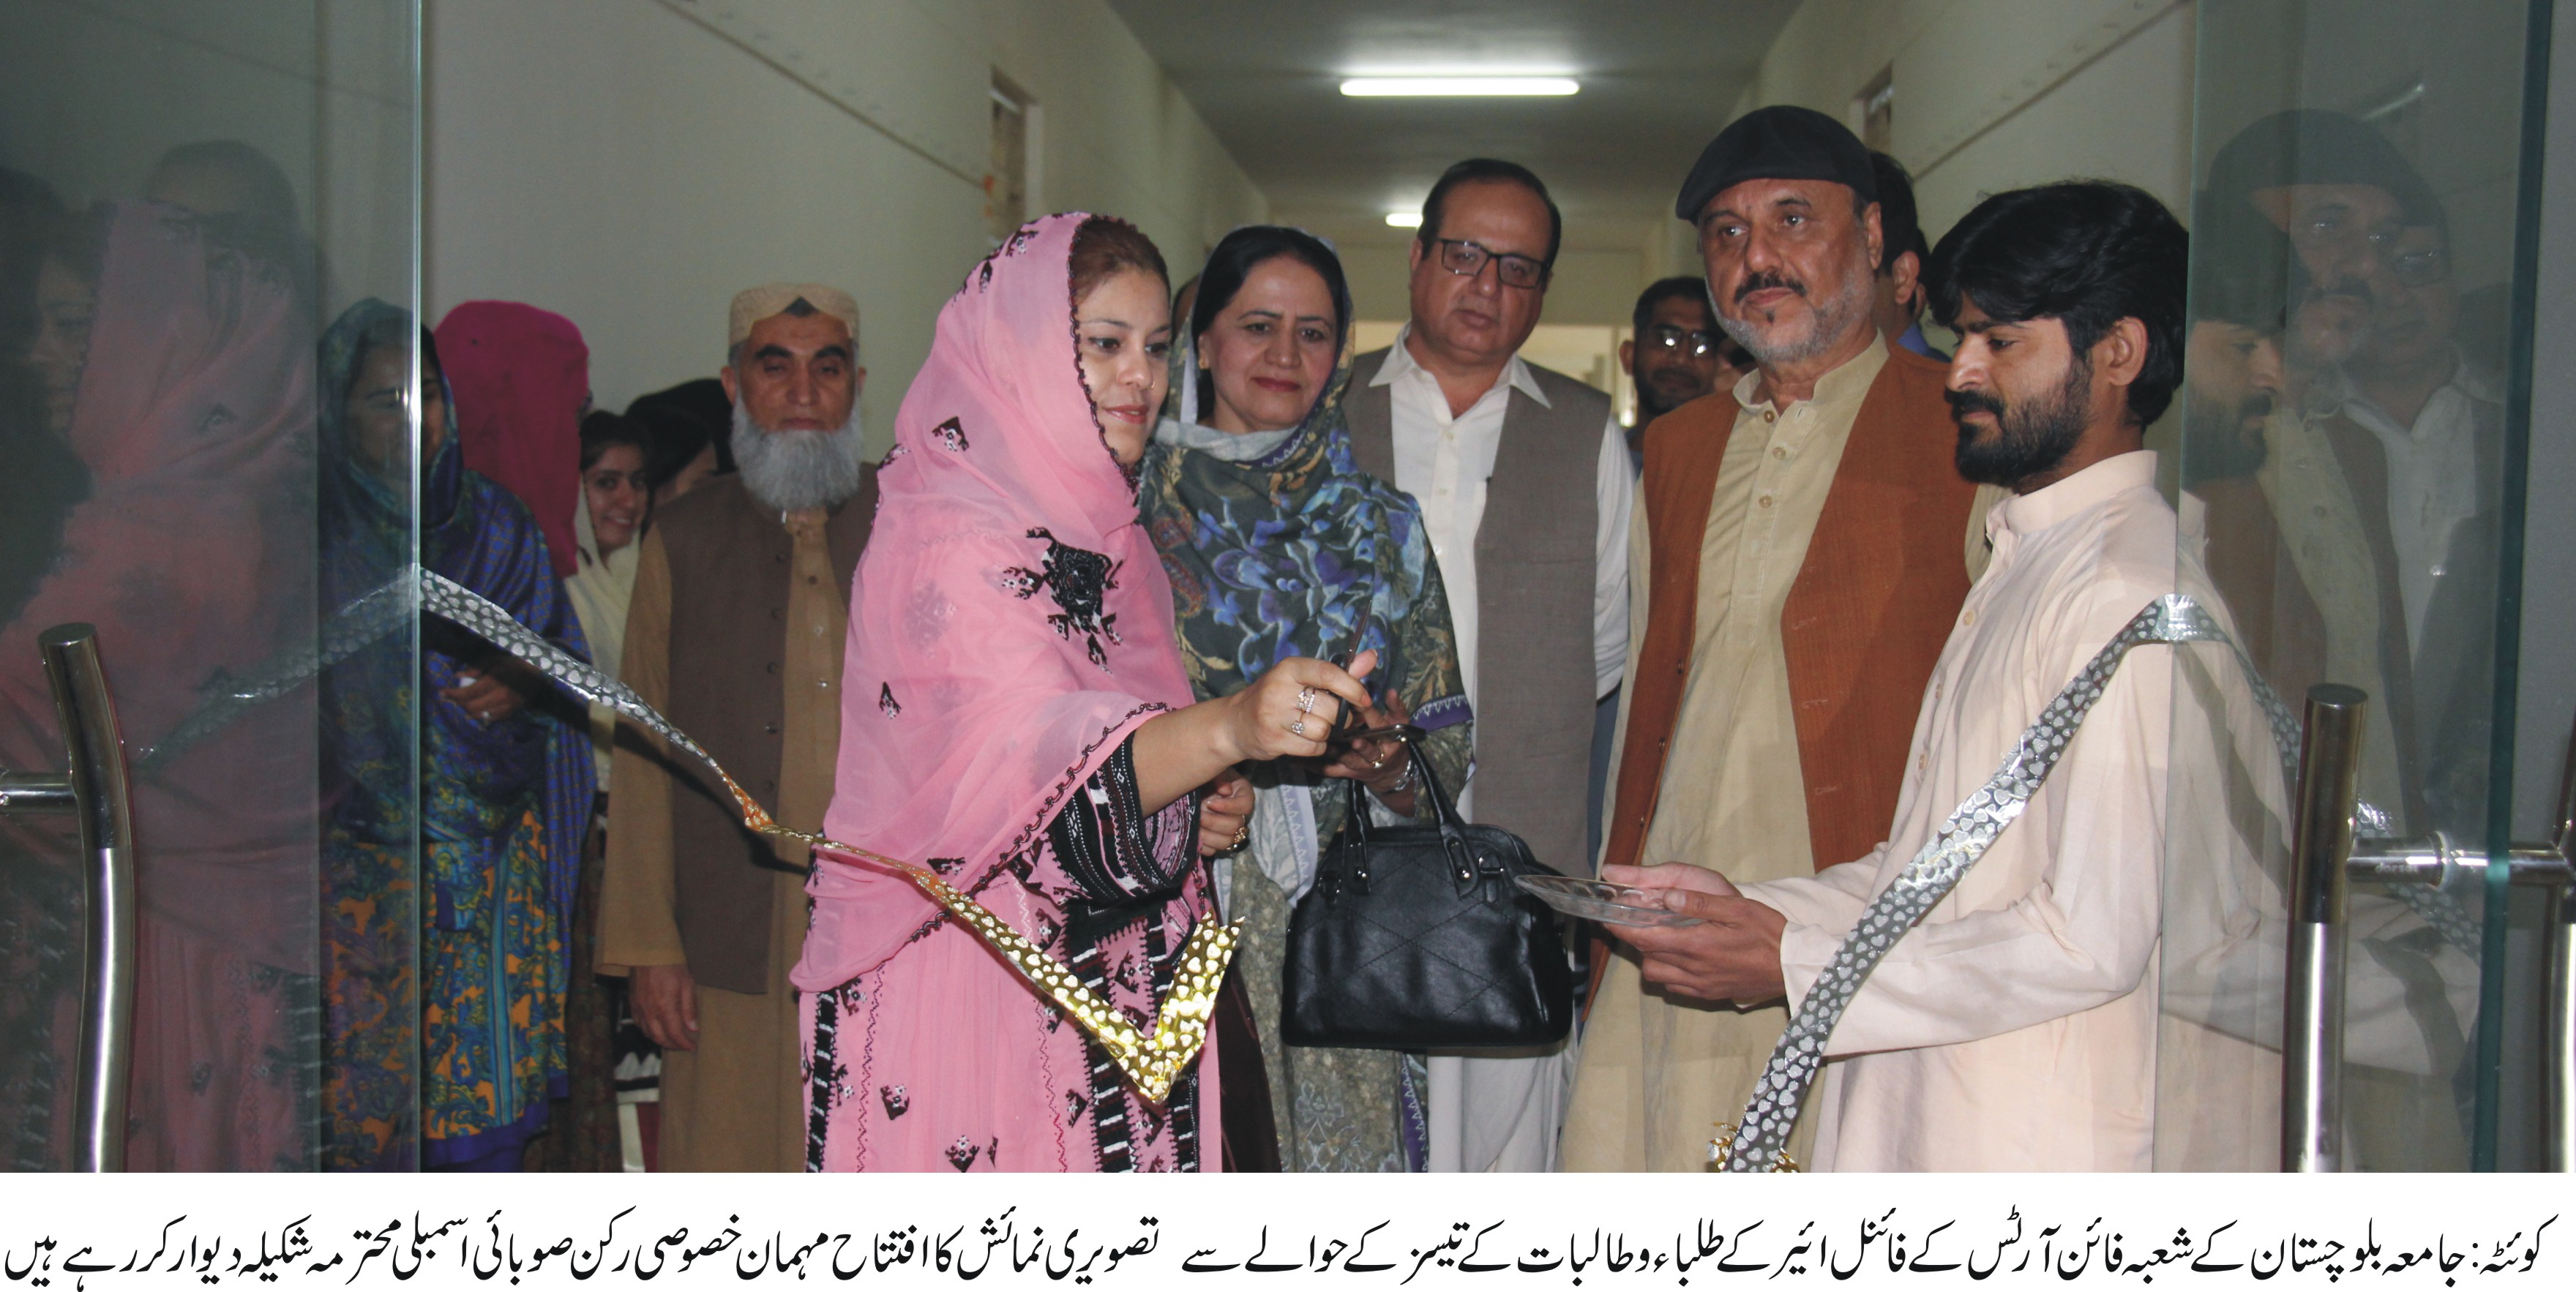 mpa shakeela dahwar inaugurates the art gallery at the university of balochistan photo express